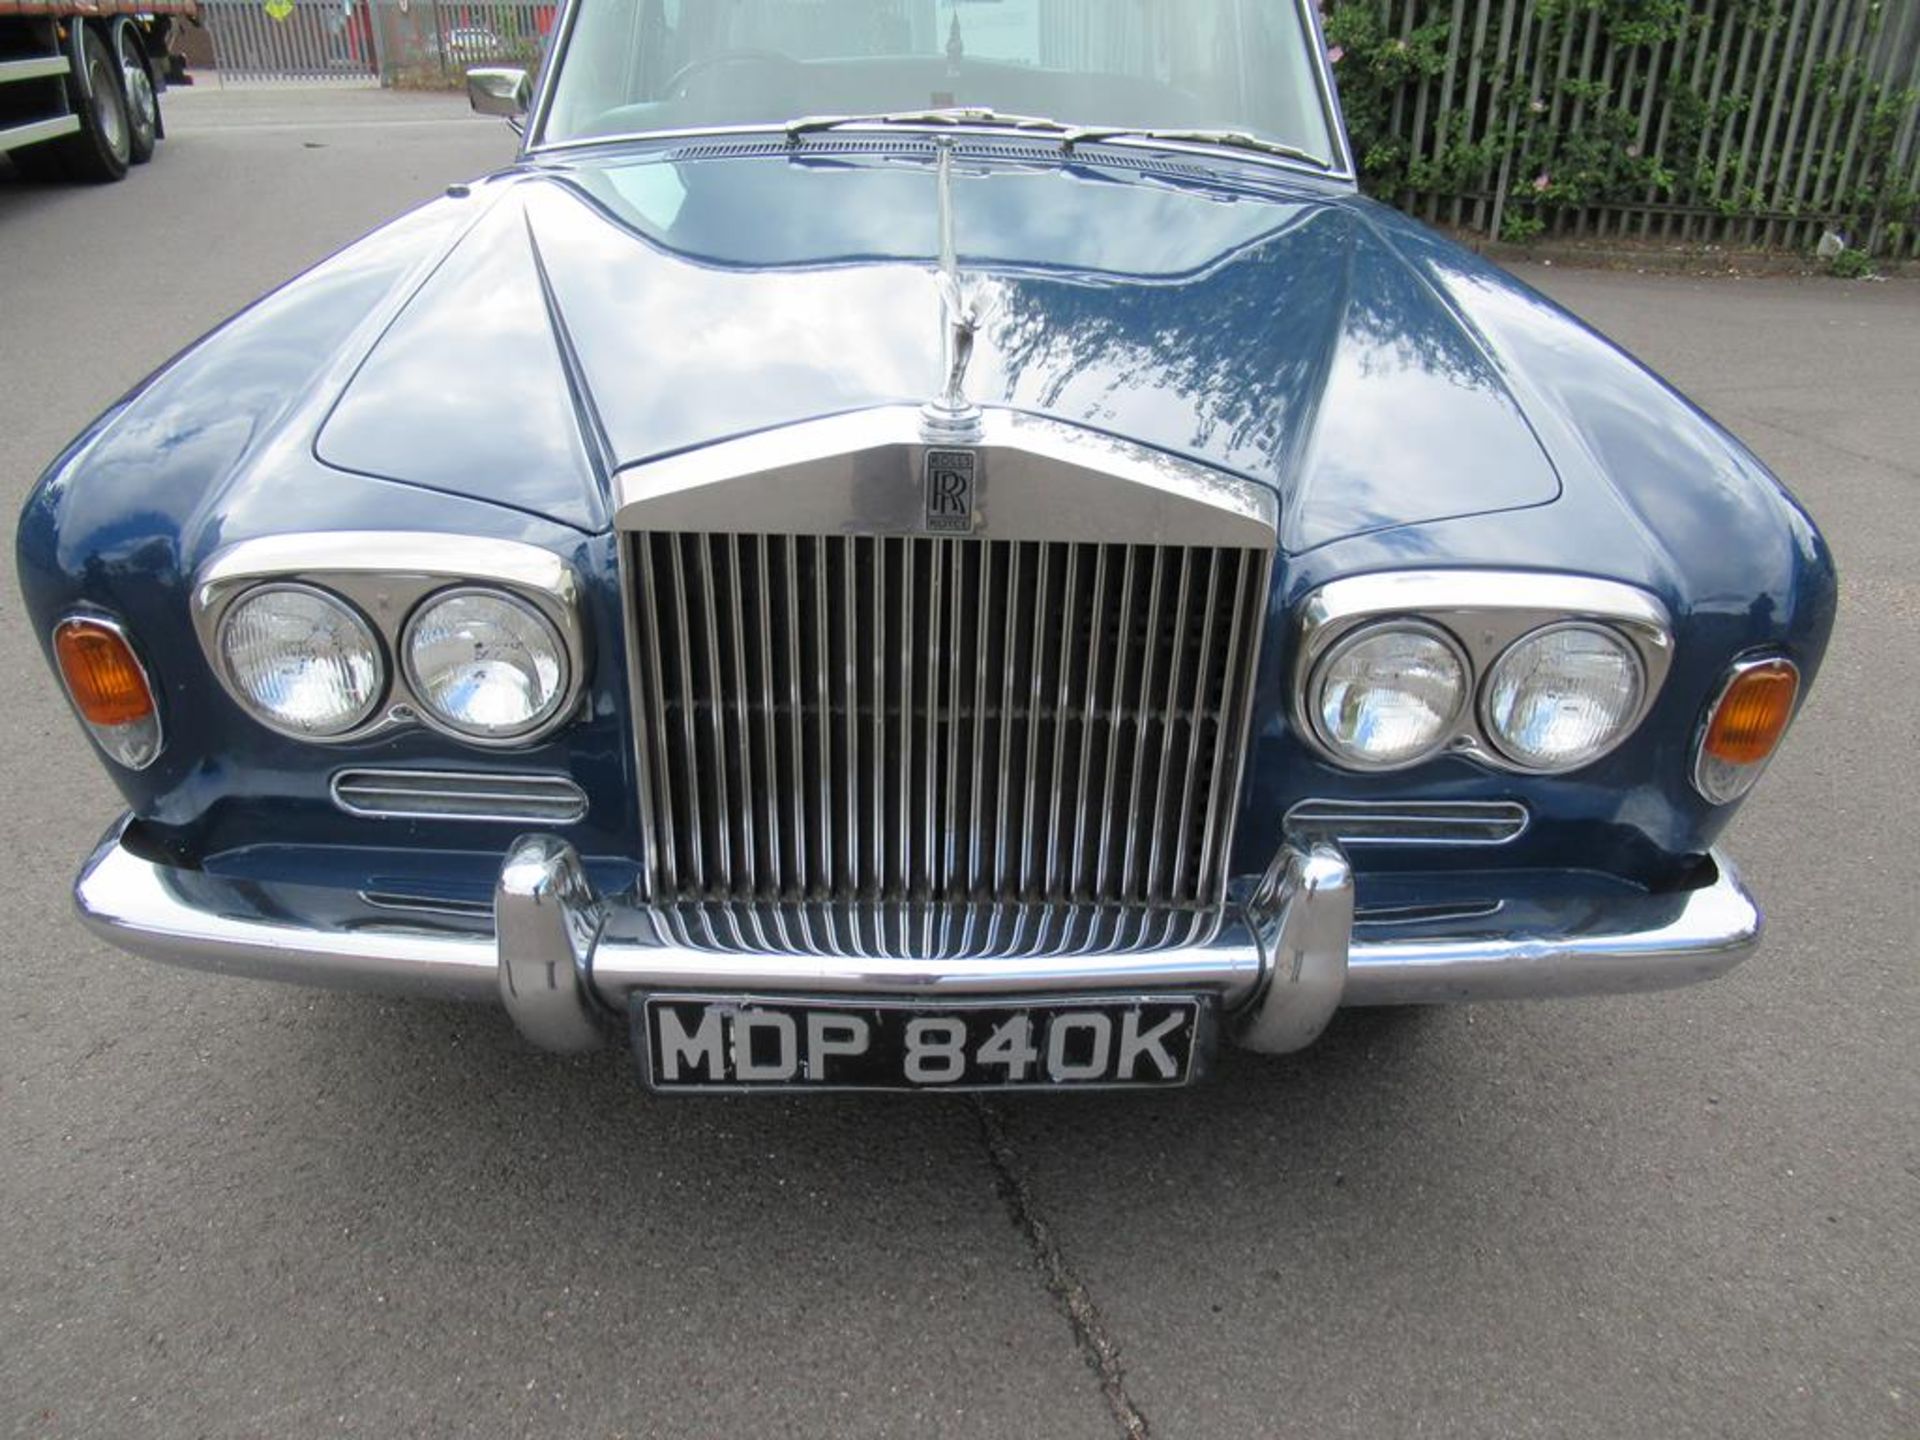 A Rolls Royce Silver Shadow Classic Car - Image 3 of 25